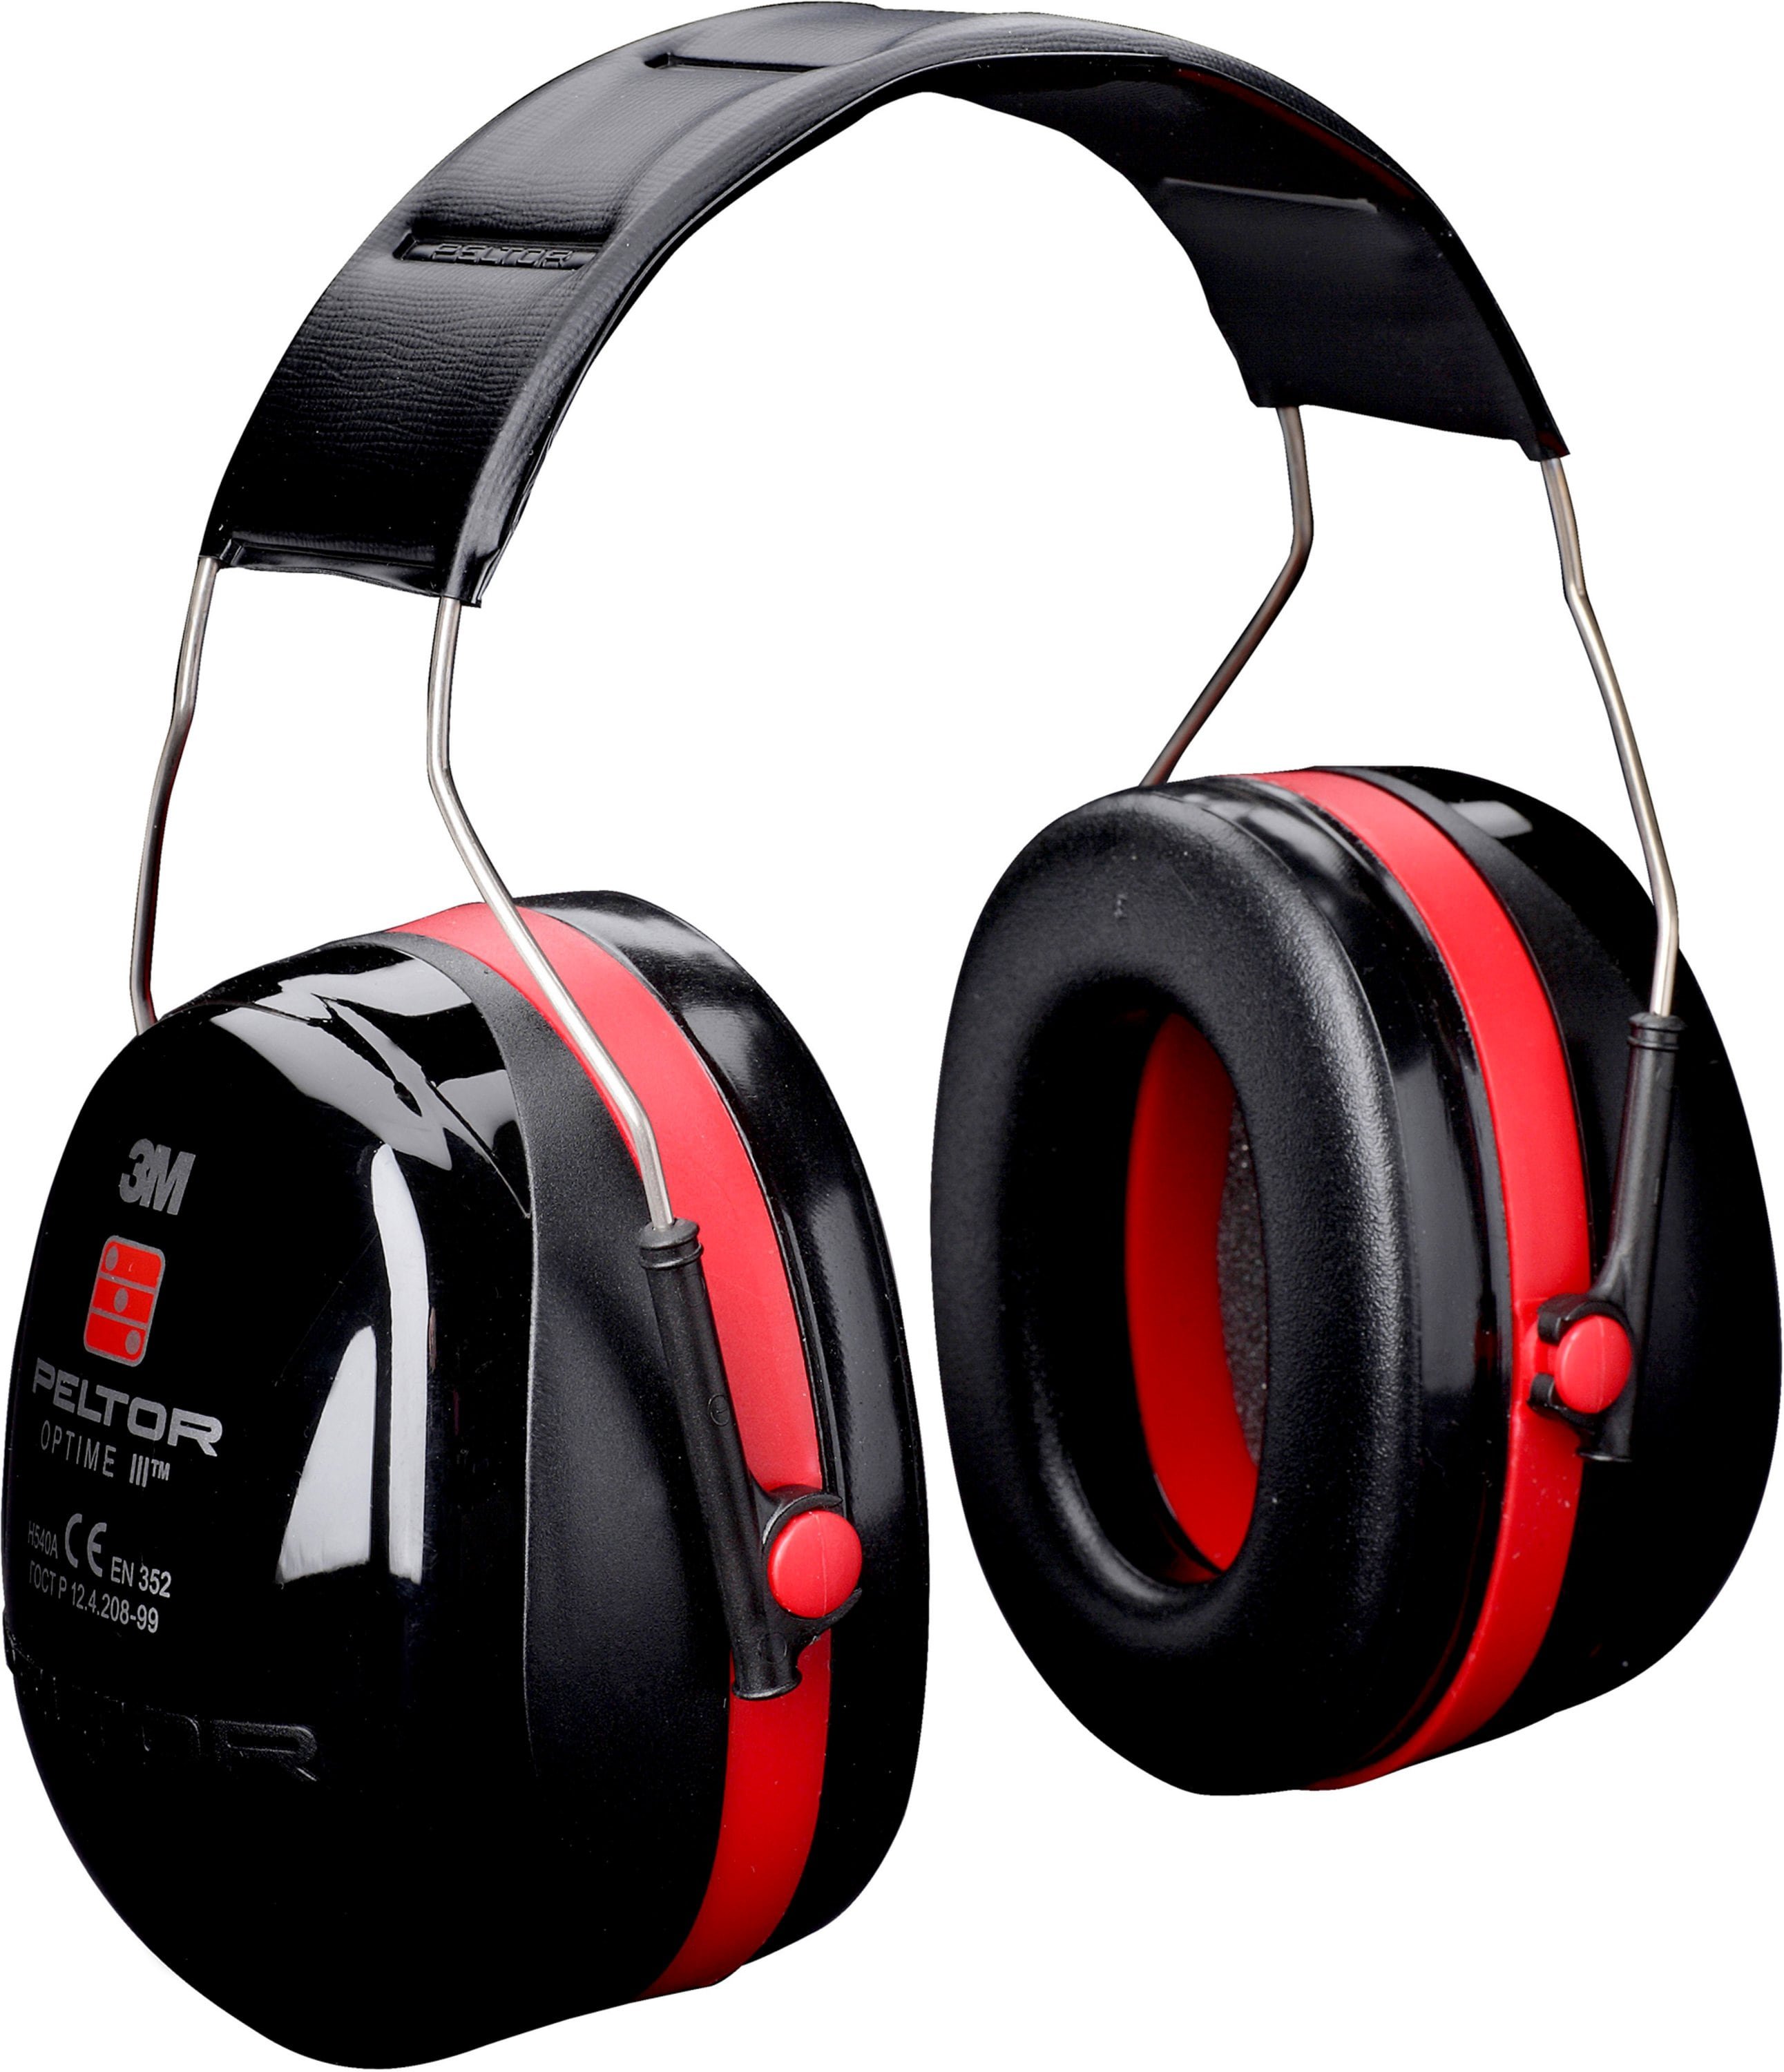 3M PELTOR Optime III Emuffs, Hband, Black/Red One size